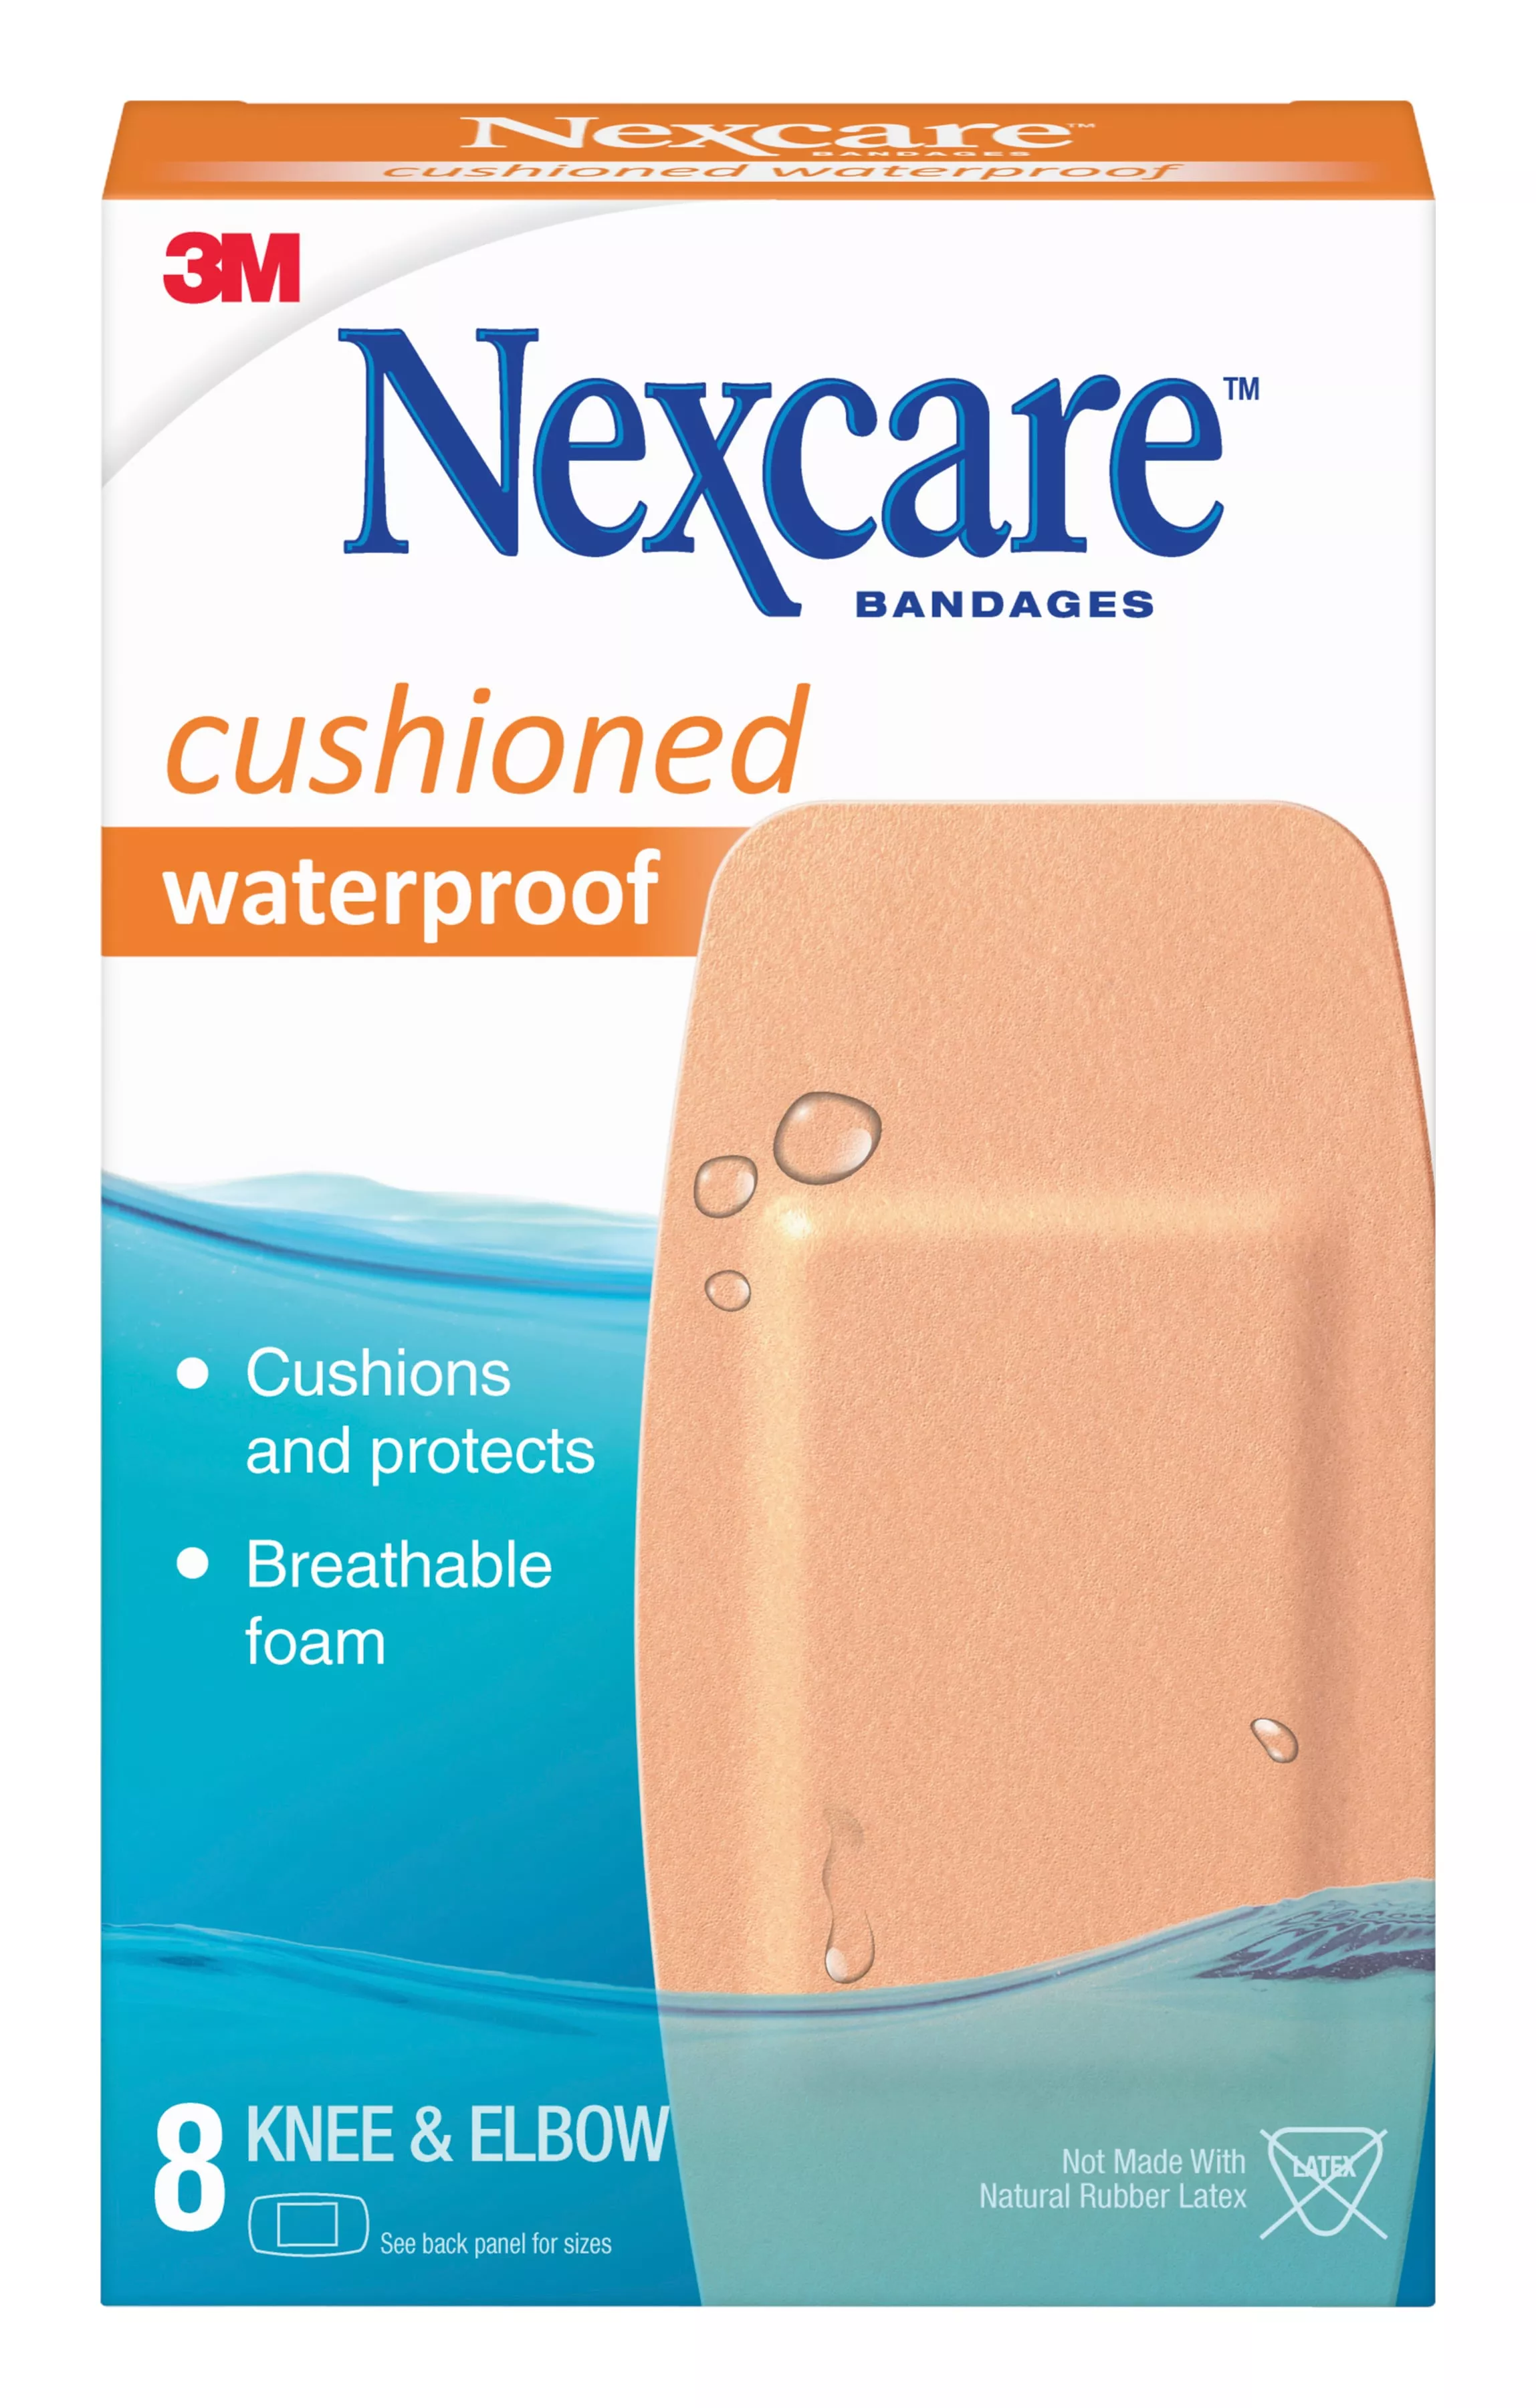 Nexcare™ Cushioned Waterproof Foam Bandages, Knee & Elbow, 8 ct.,
522-08CB